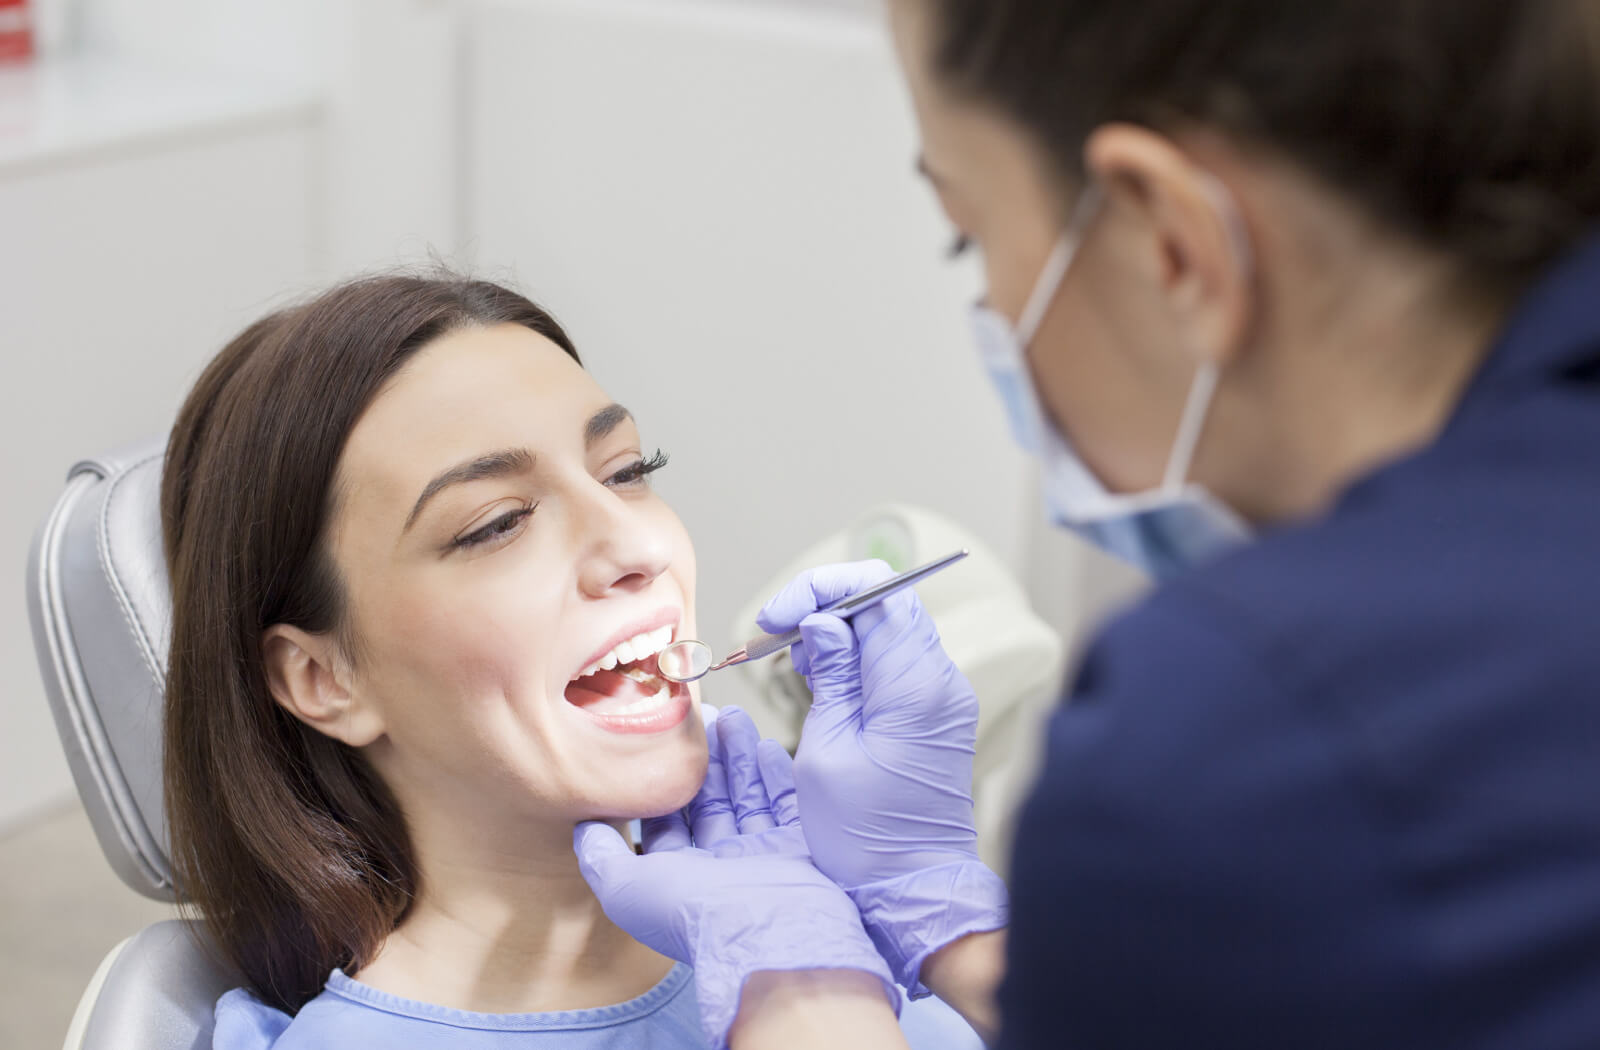 A woman sitting in a dentist's chair while a female dentist examines her teeth.